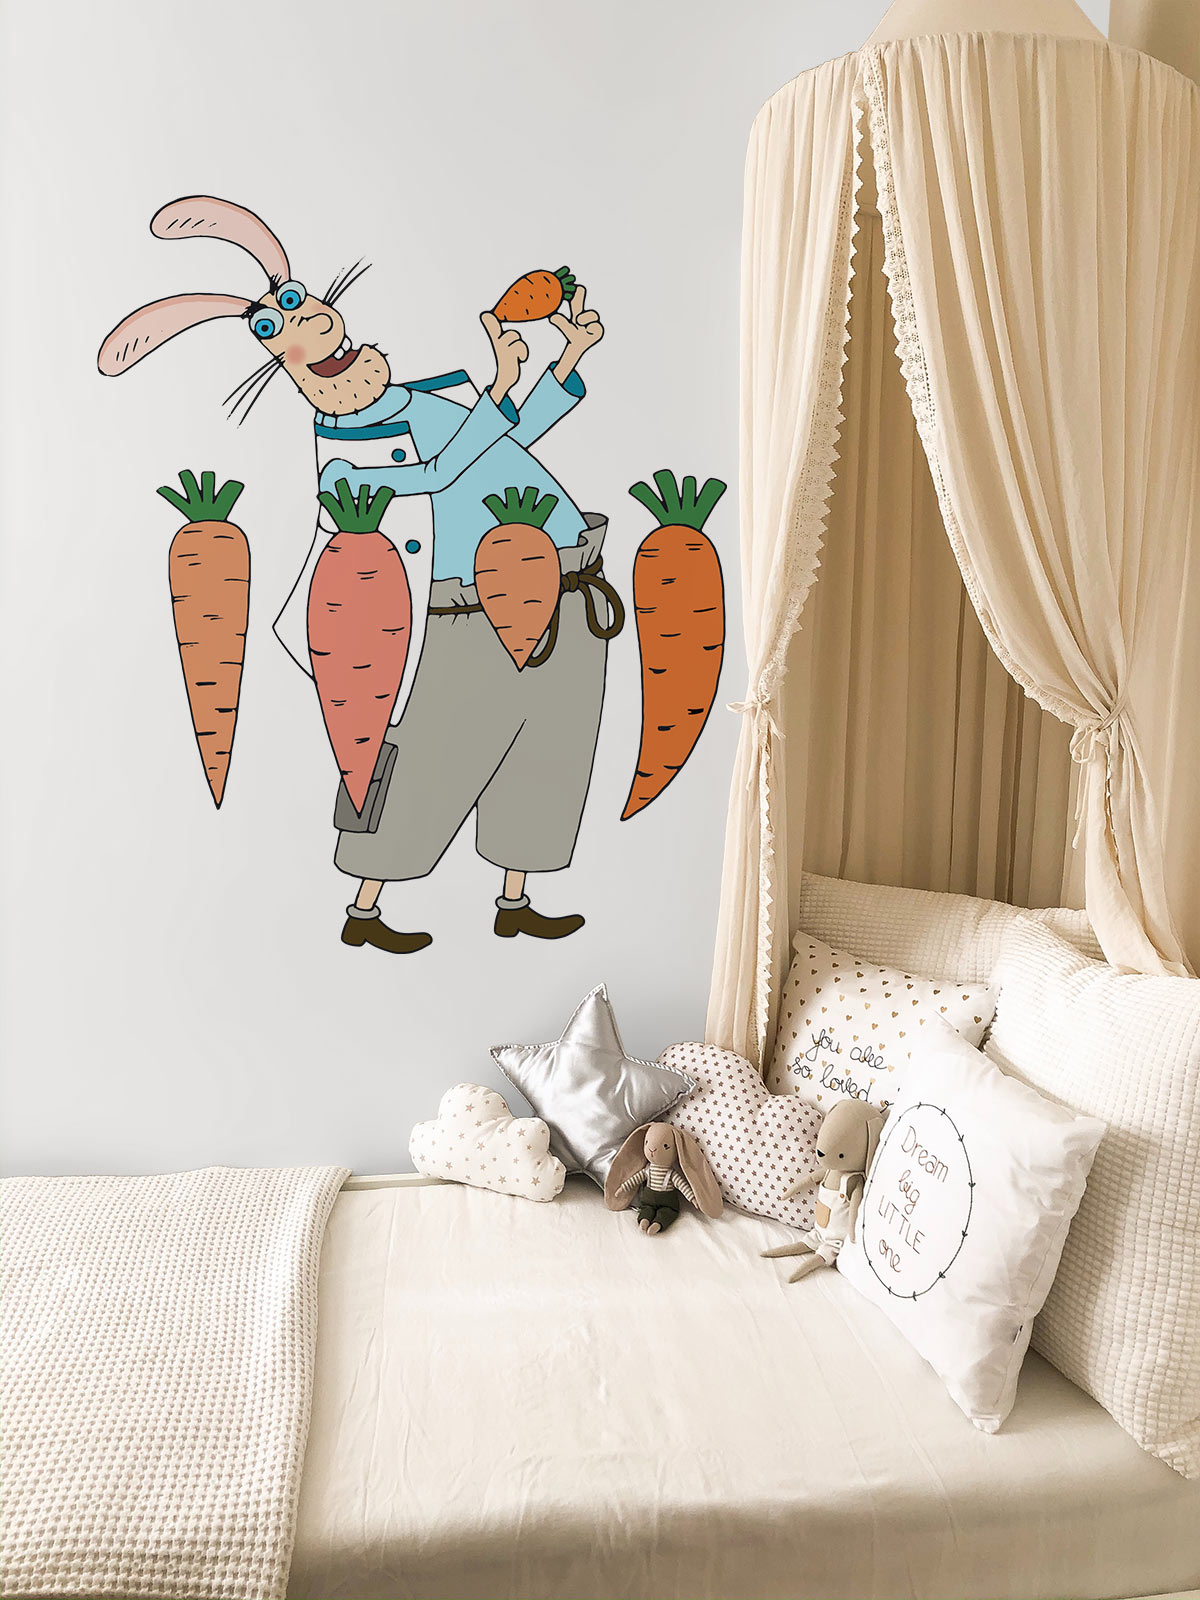 Adalbert the Rabbit and Carrots